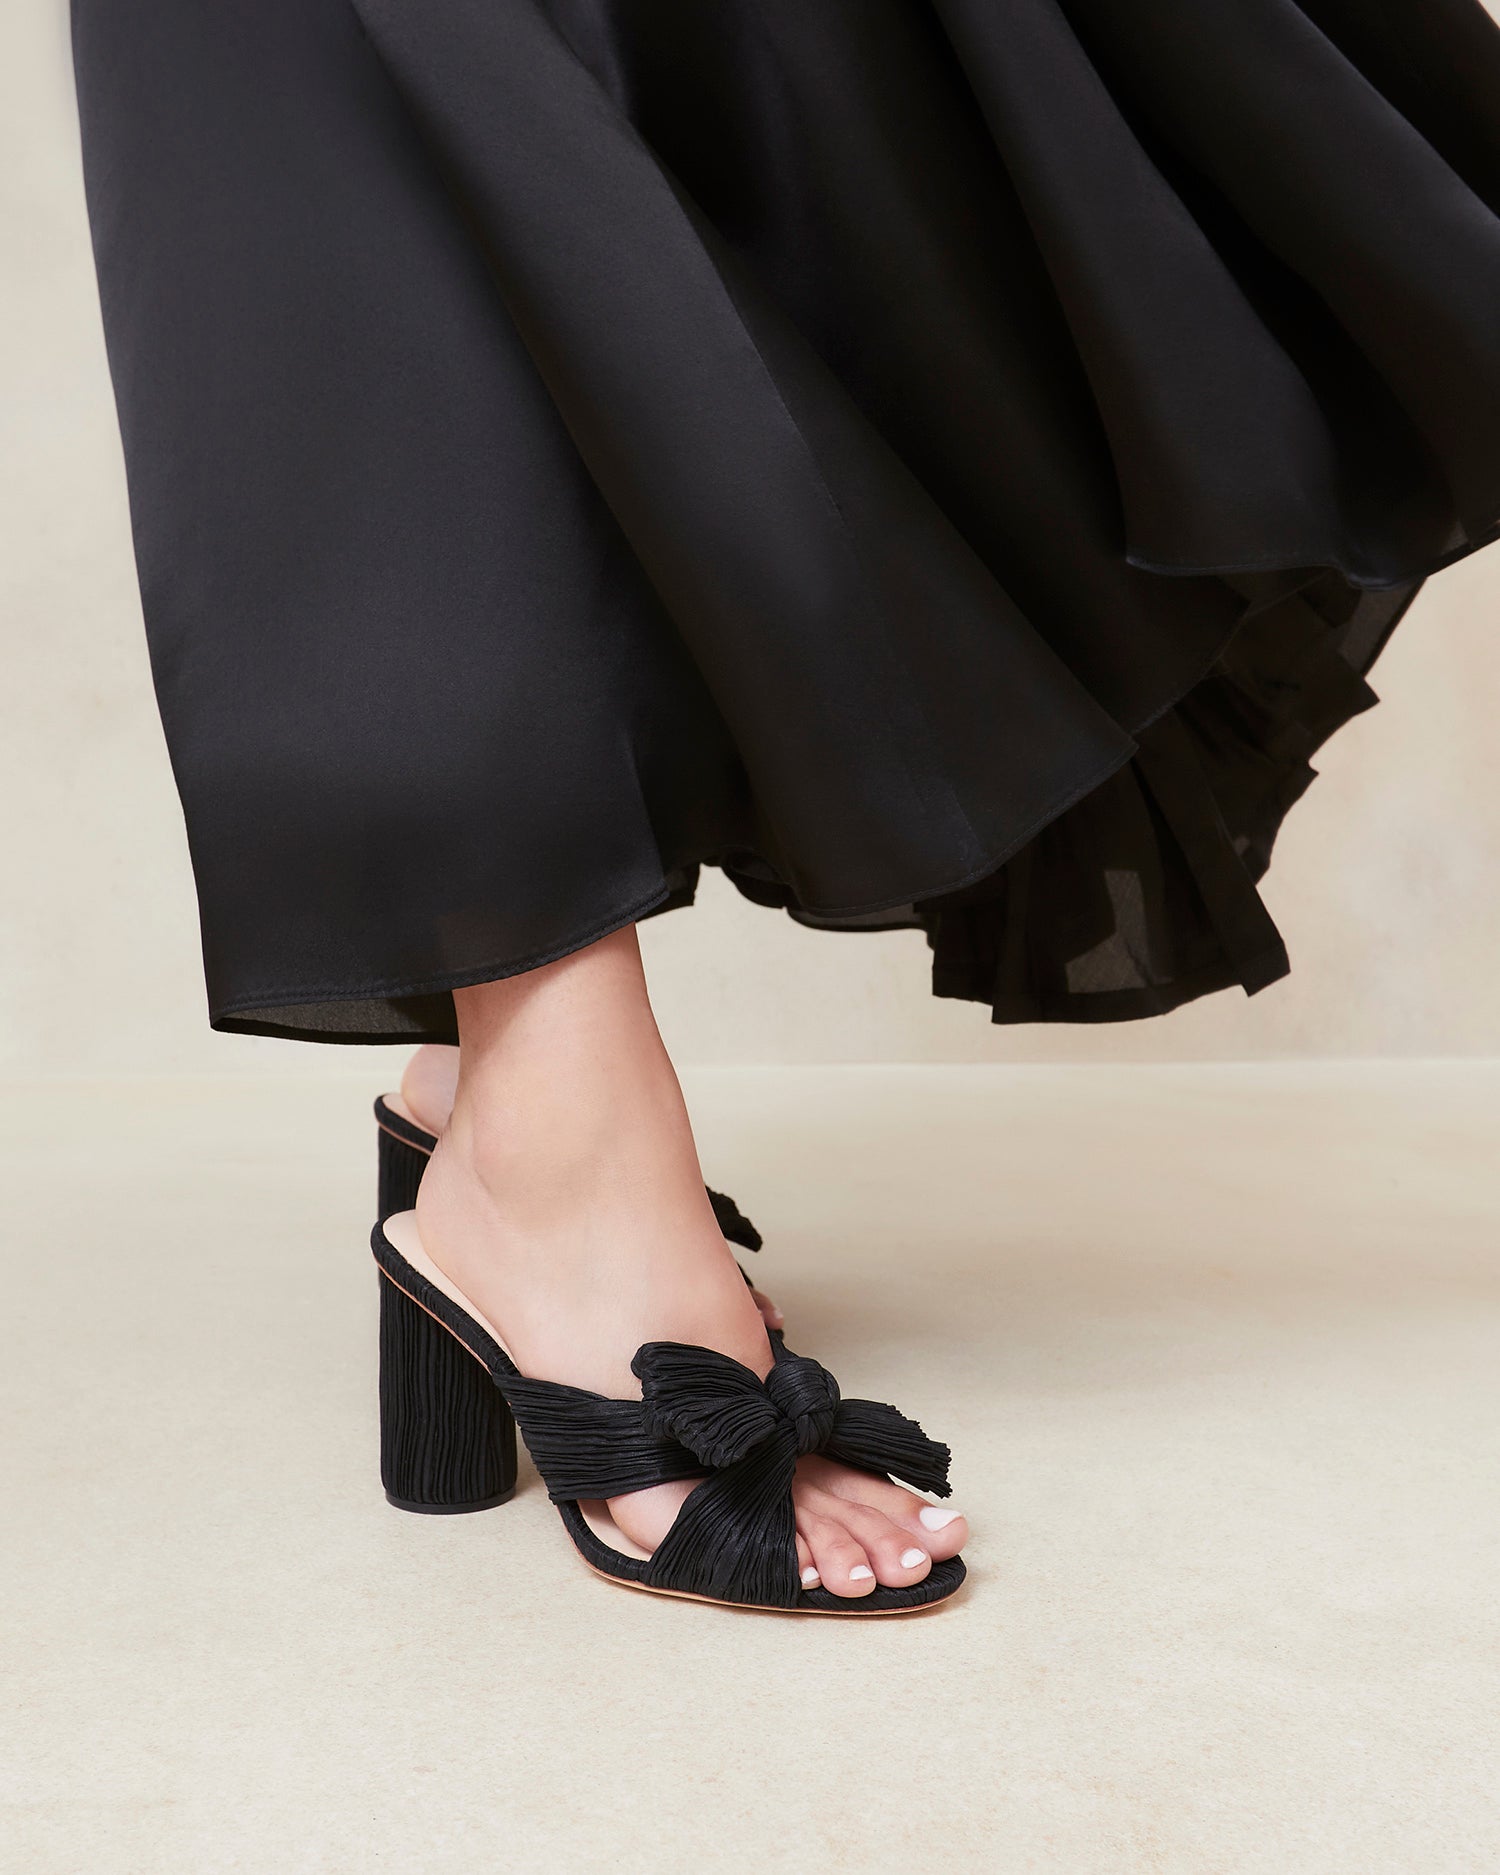 Nine West Pruce Women's Leather Dress Sandals, Size: 9.5, Med Brown